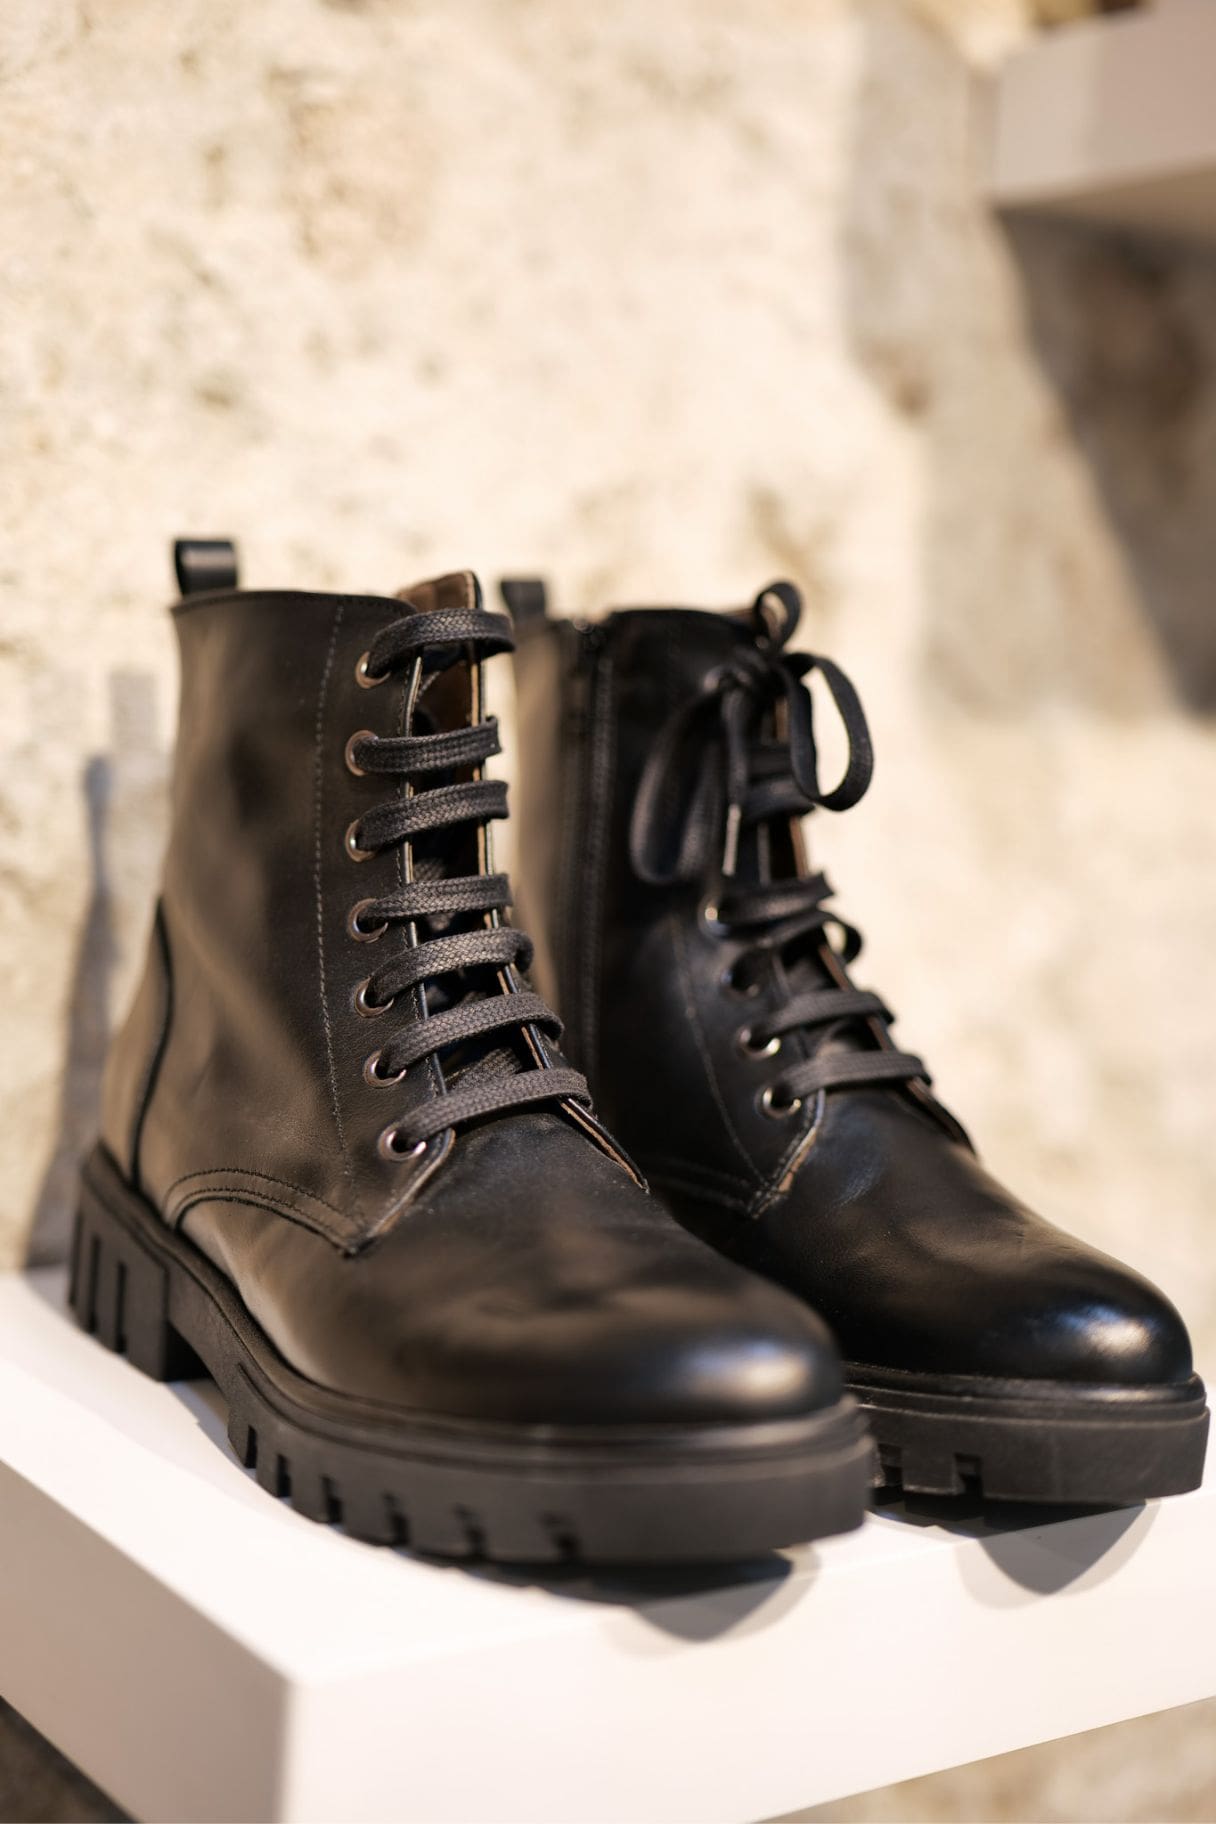 Boots à lacets noire Patricia miller - Nappa Maroquinerie